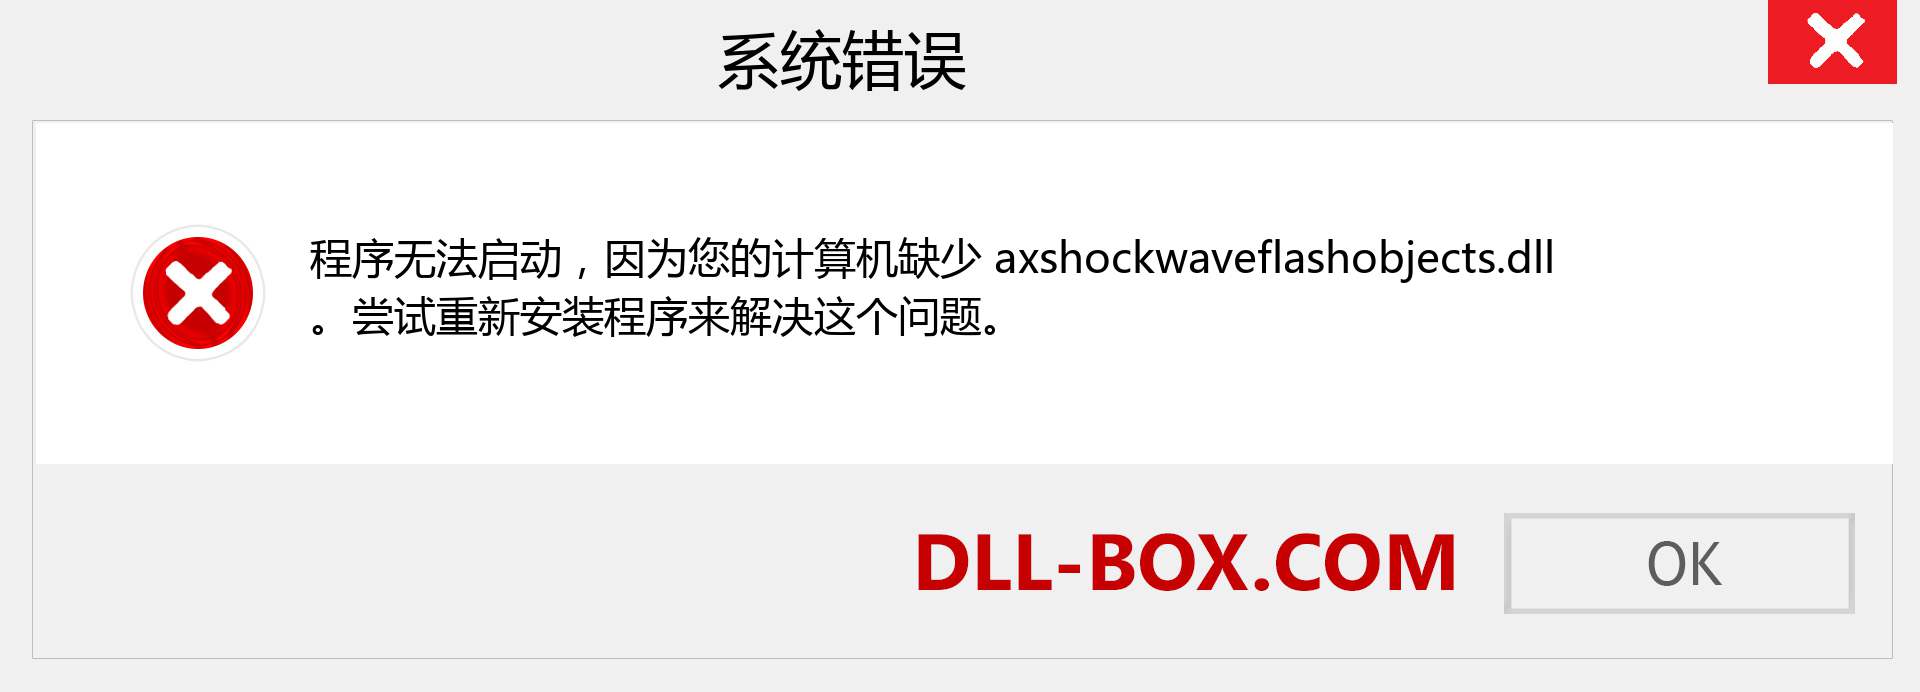 axshockwaveflashobjects.dll 文件丢失？。 适用于 Windows 7、8、10 的下载 - 修复 Windows、照片、图像上的 axshockwaveflashobjects dll 丢失错误